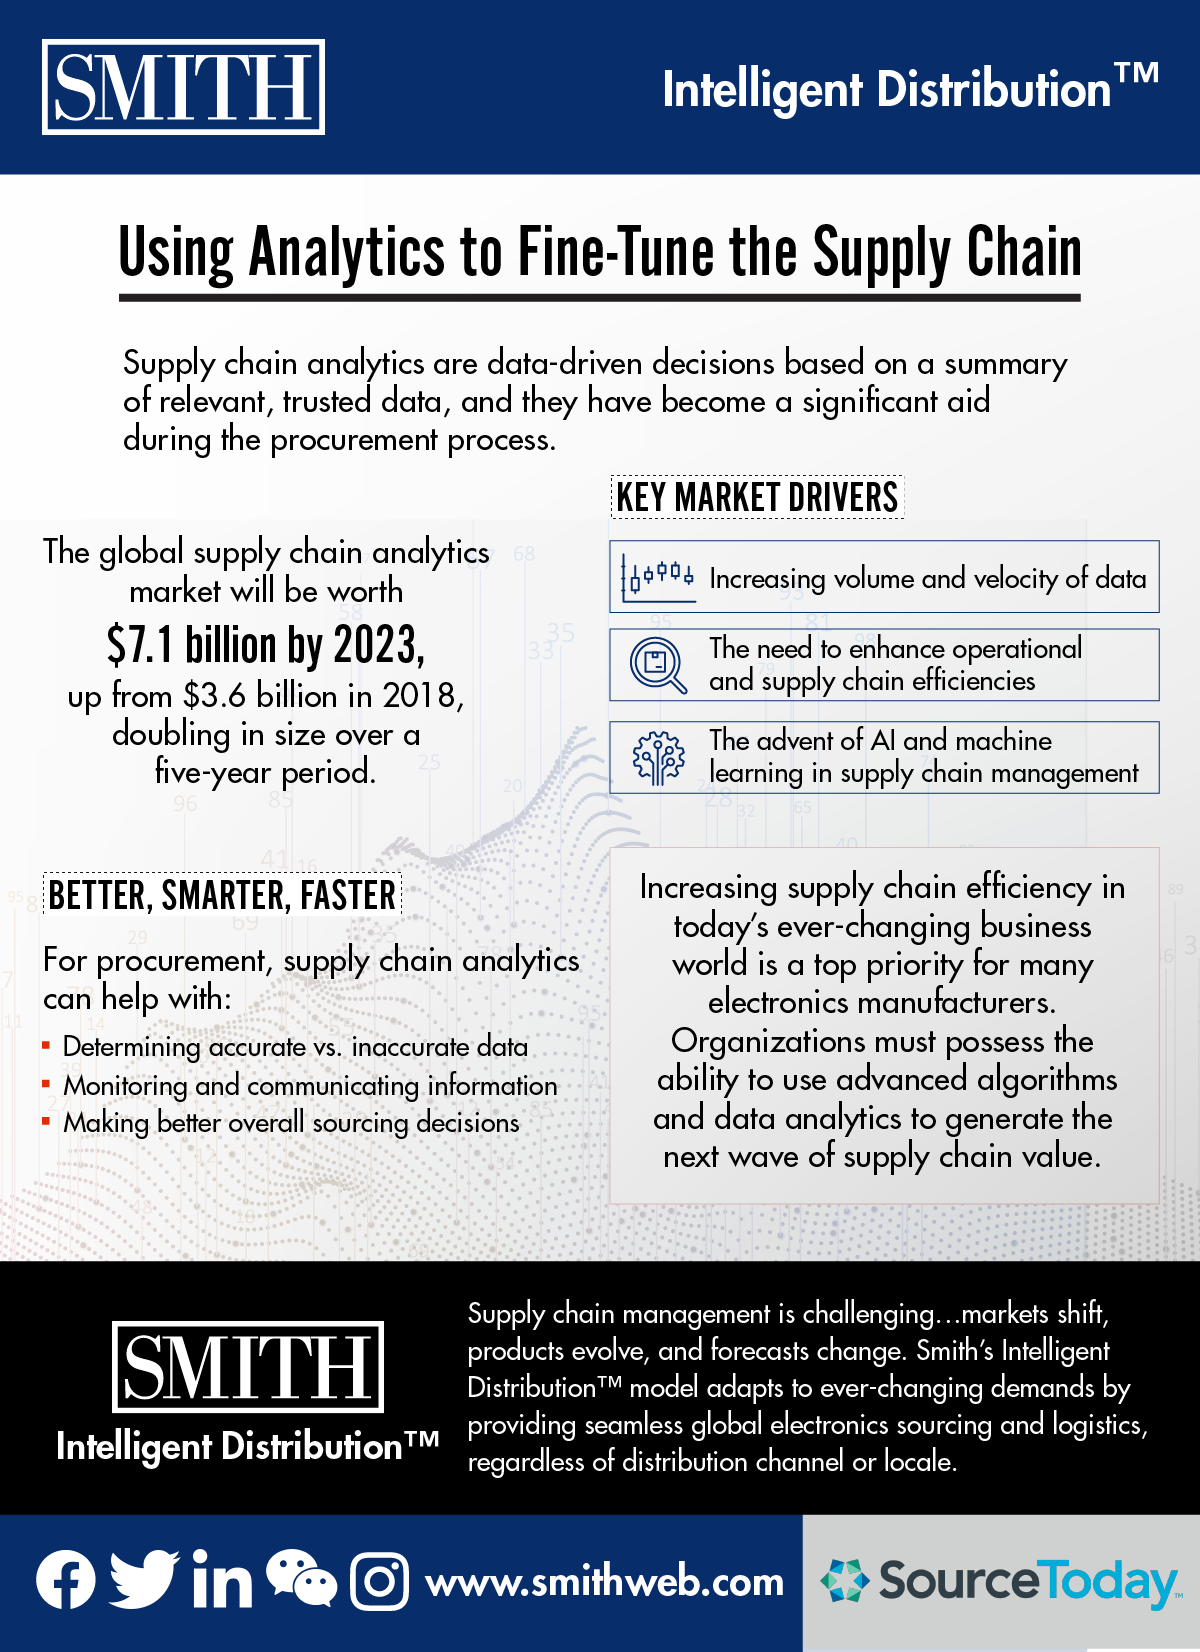 Smith Using Analytics to Fine Tune the Supply Chain 10.28.2019 01